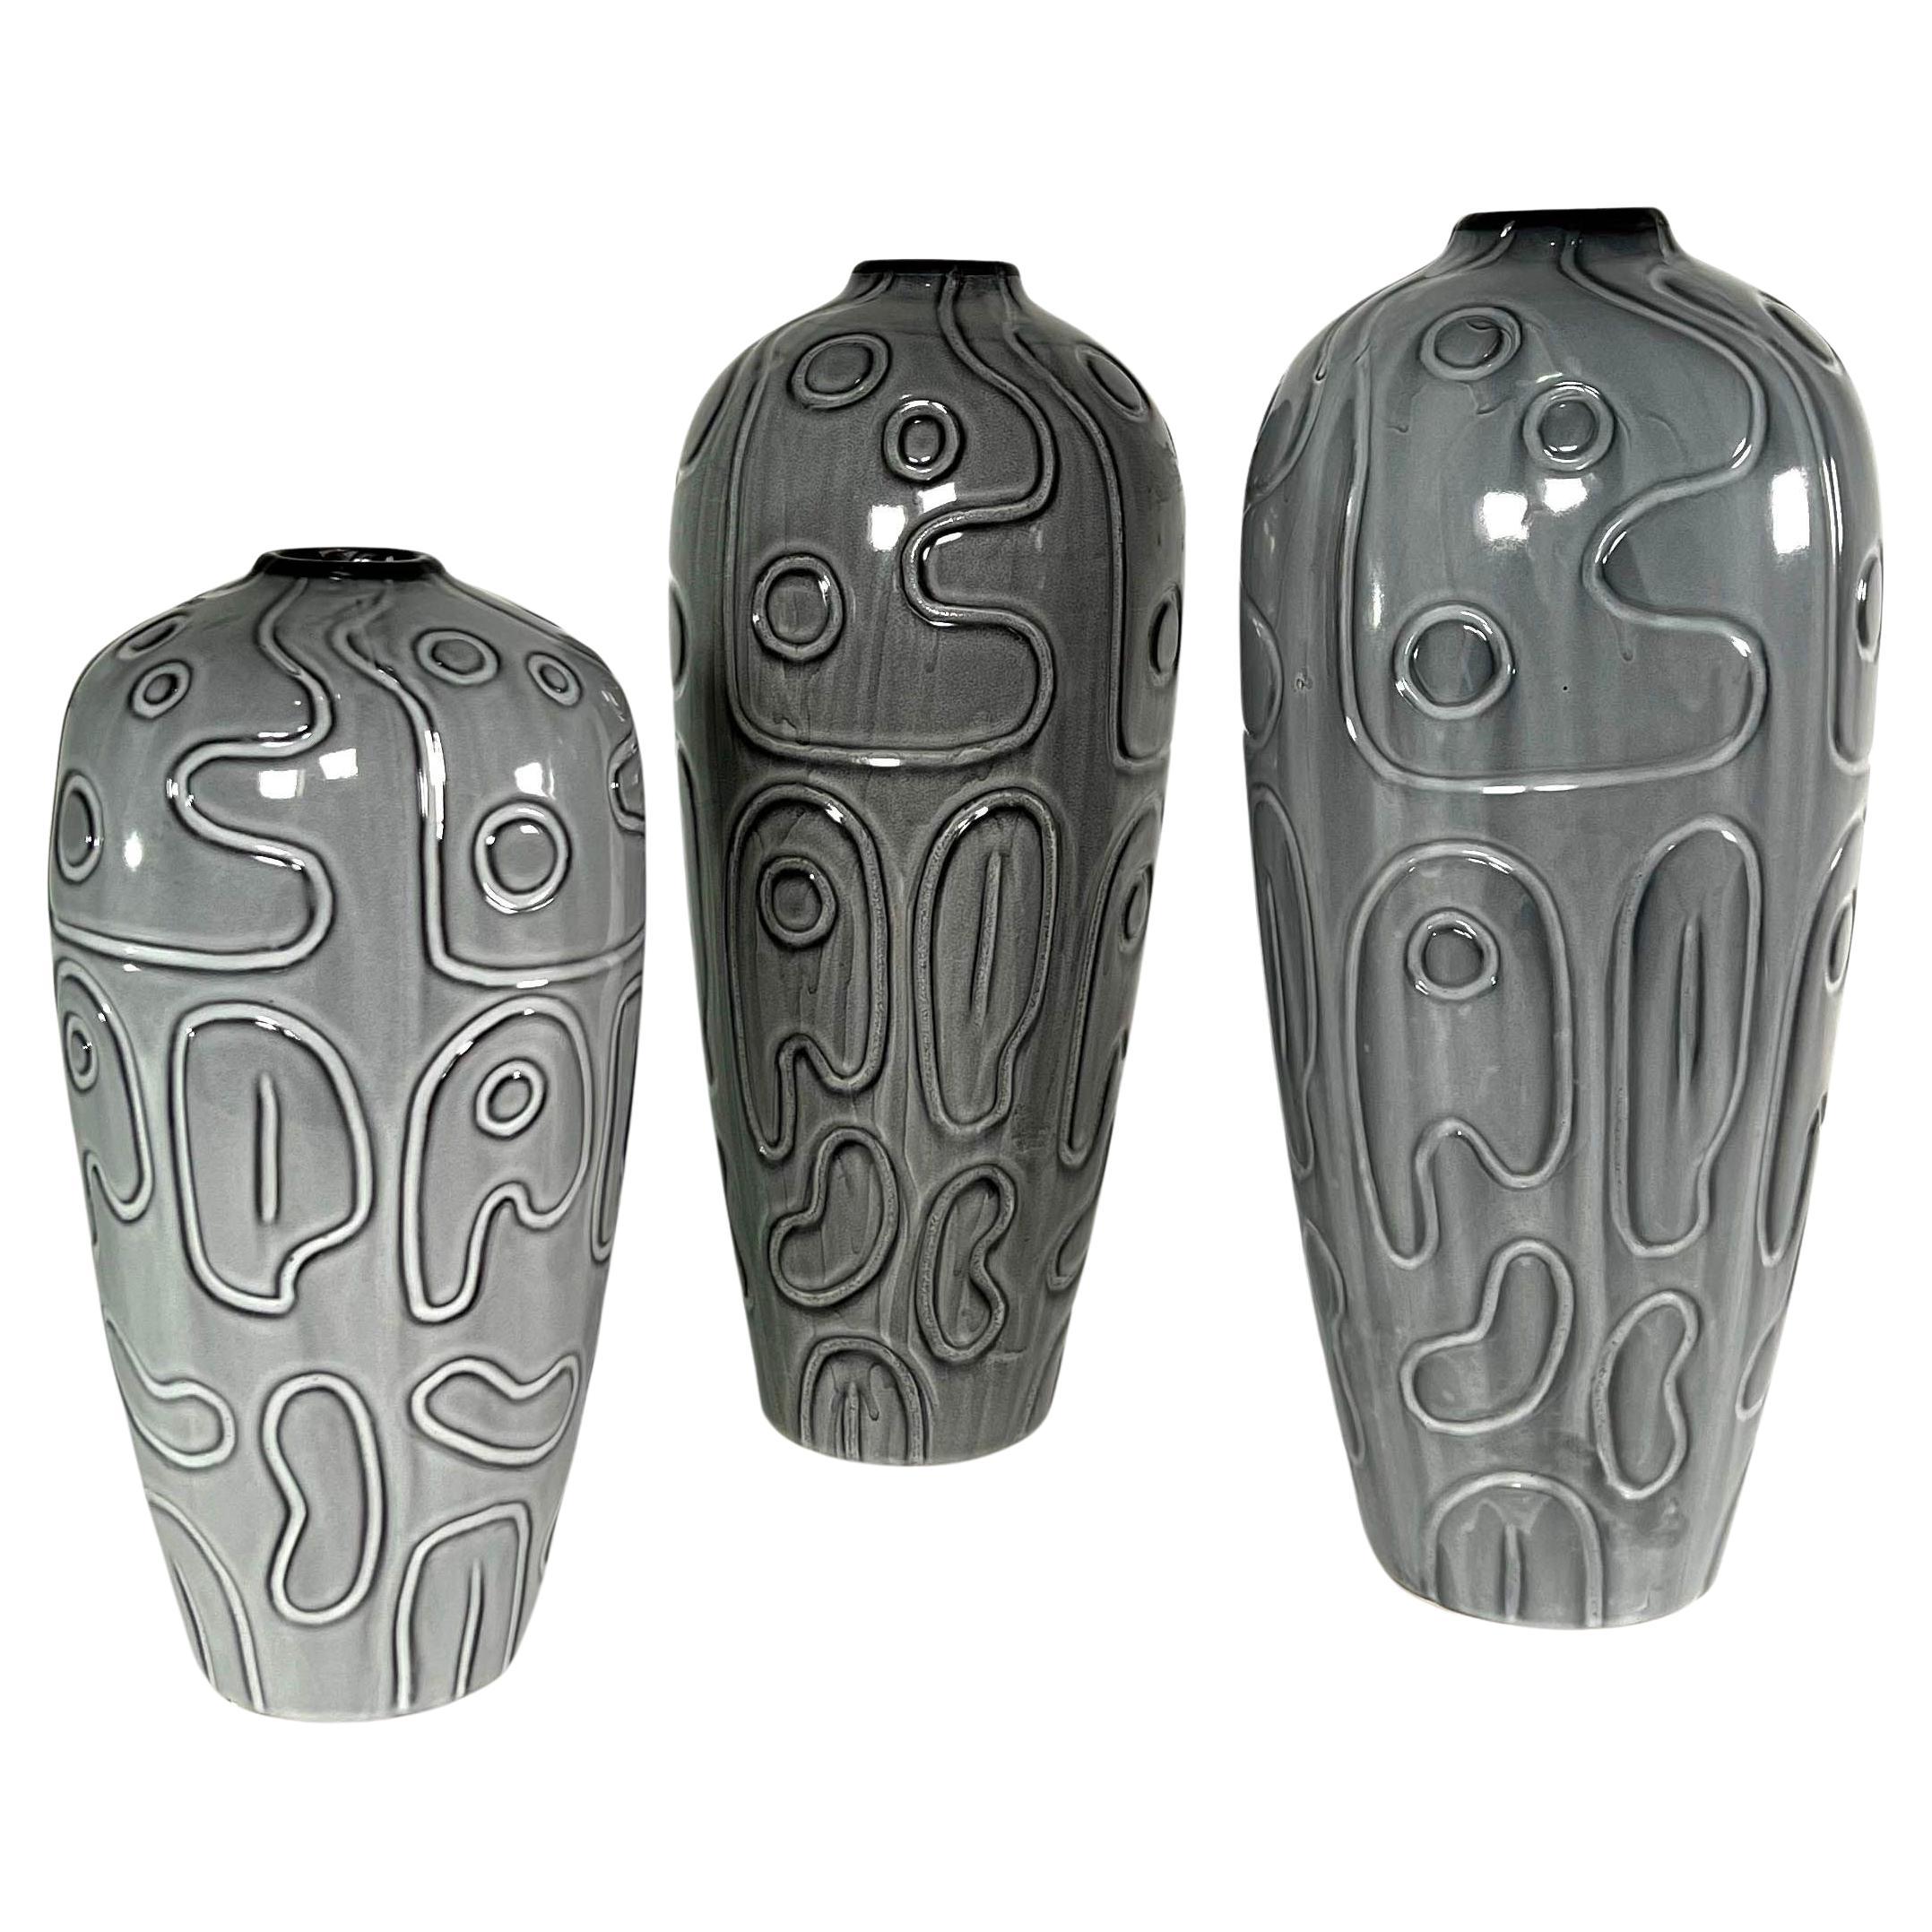 Group of 3 Italian Modern Studio Gray Glazed and Incised Ceramic Vases	